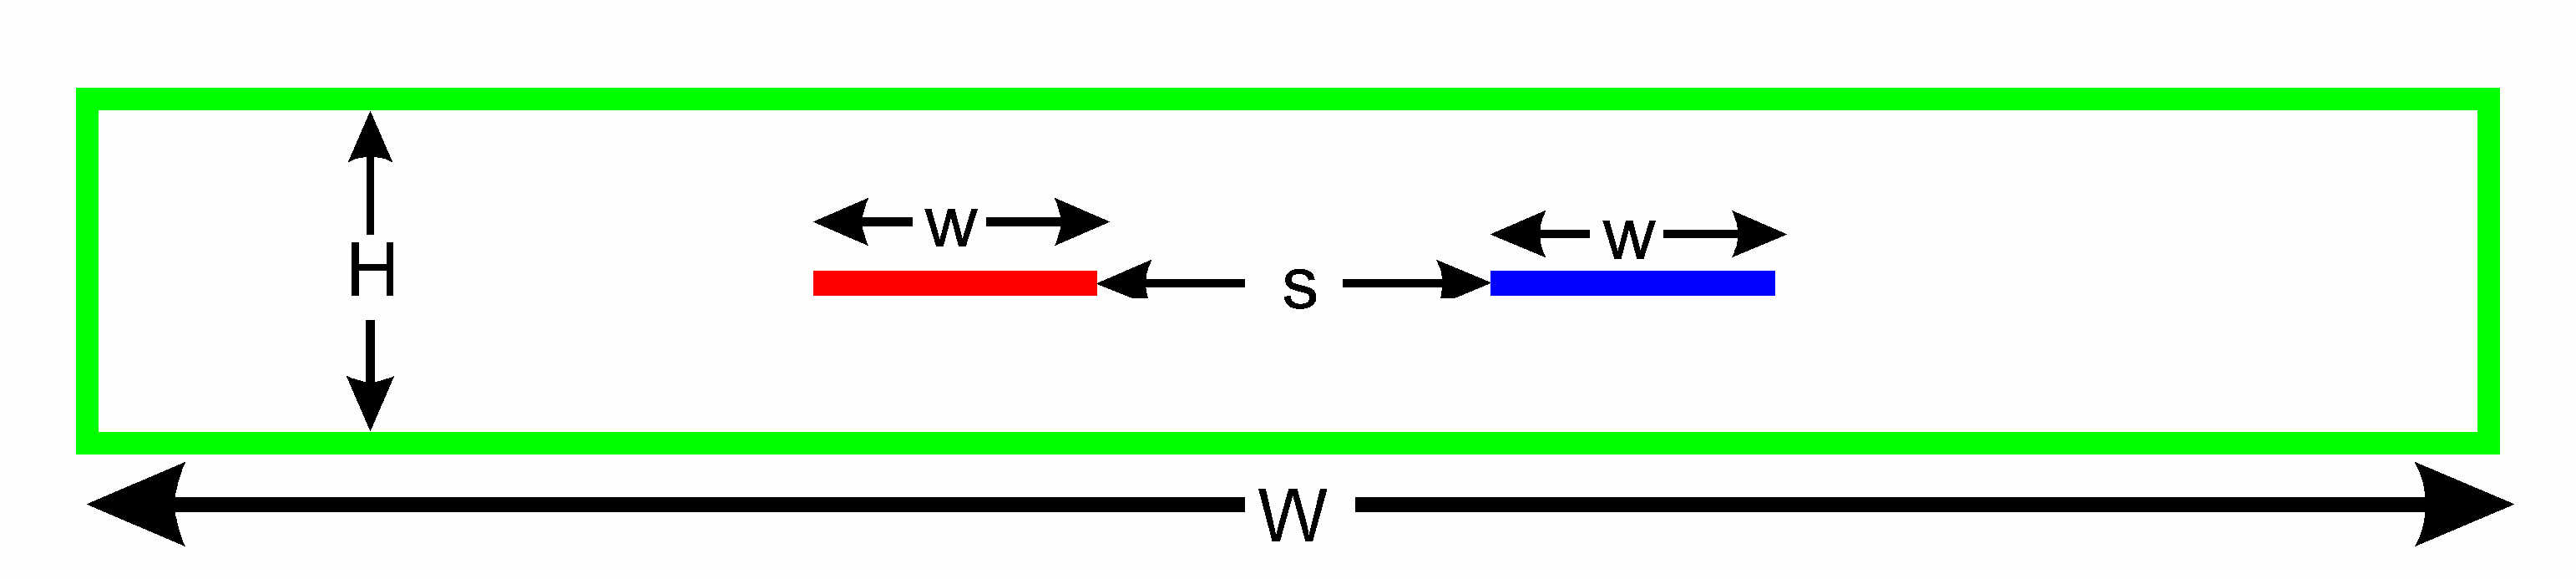 a directional coupler